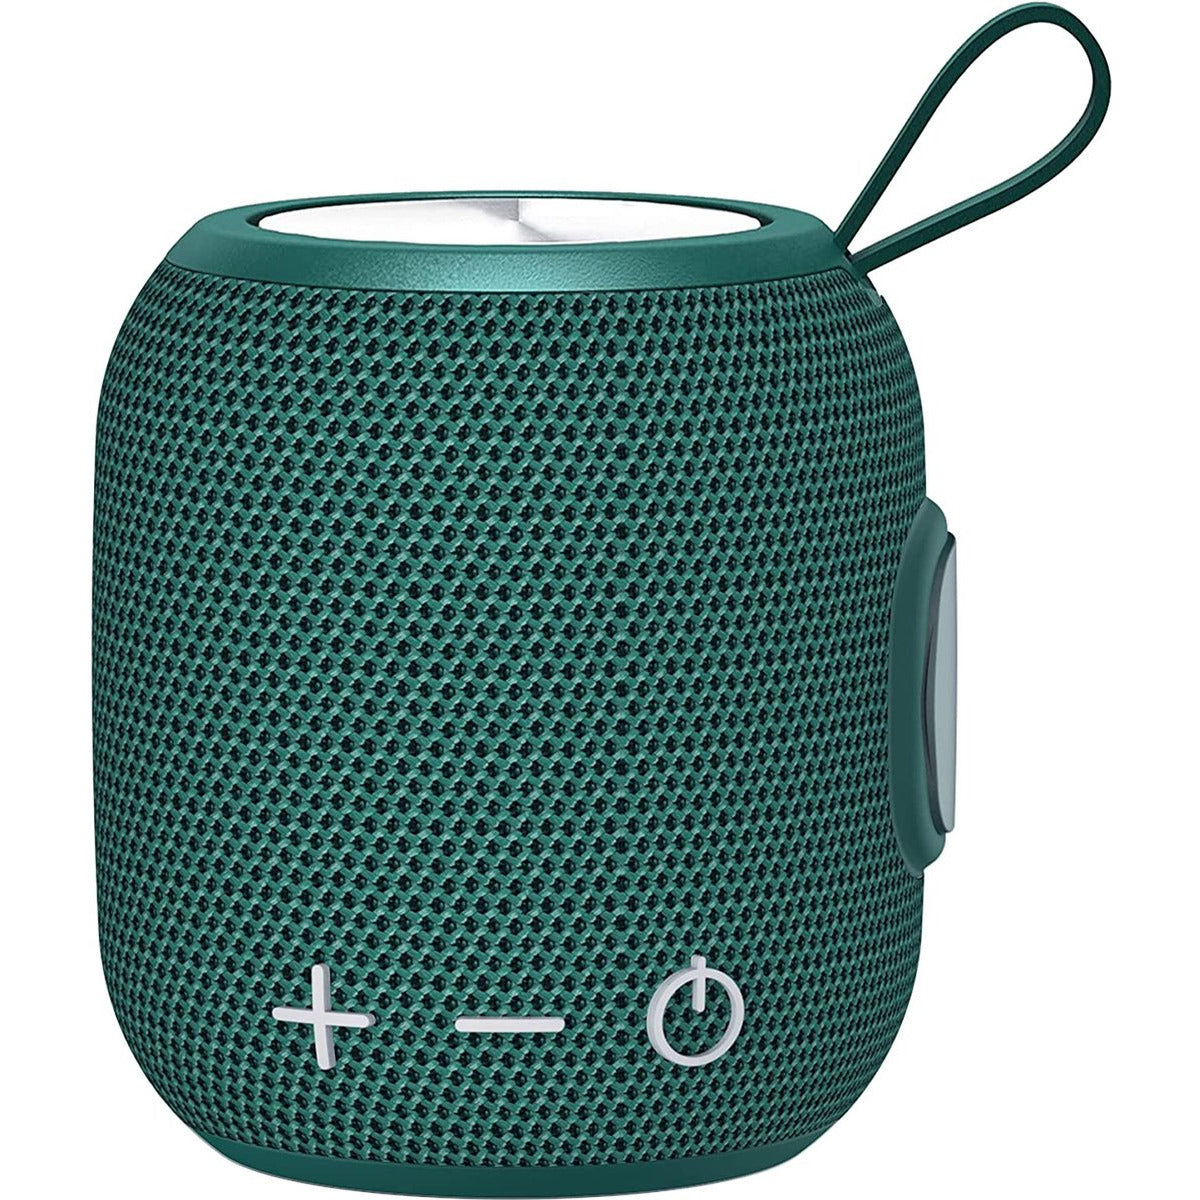 M7 - Draagbare Bluetooth Luidsprekers - Draadloze Speaker - Waterdichte Outdoor Speaker - Bluetooth 5.0 - Dual Pairing - 360º Stereo Surround Sound - 12 uur speeltijd - IPX7 Waterdicht - 10 Meter Bereik - Donker Groen